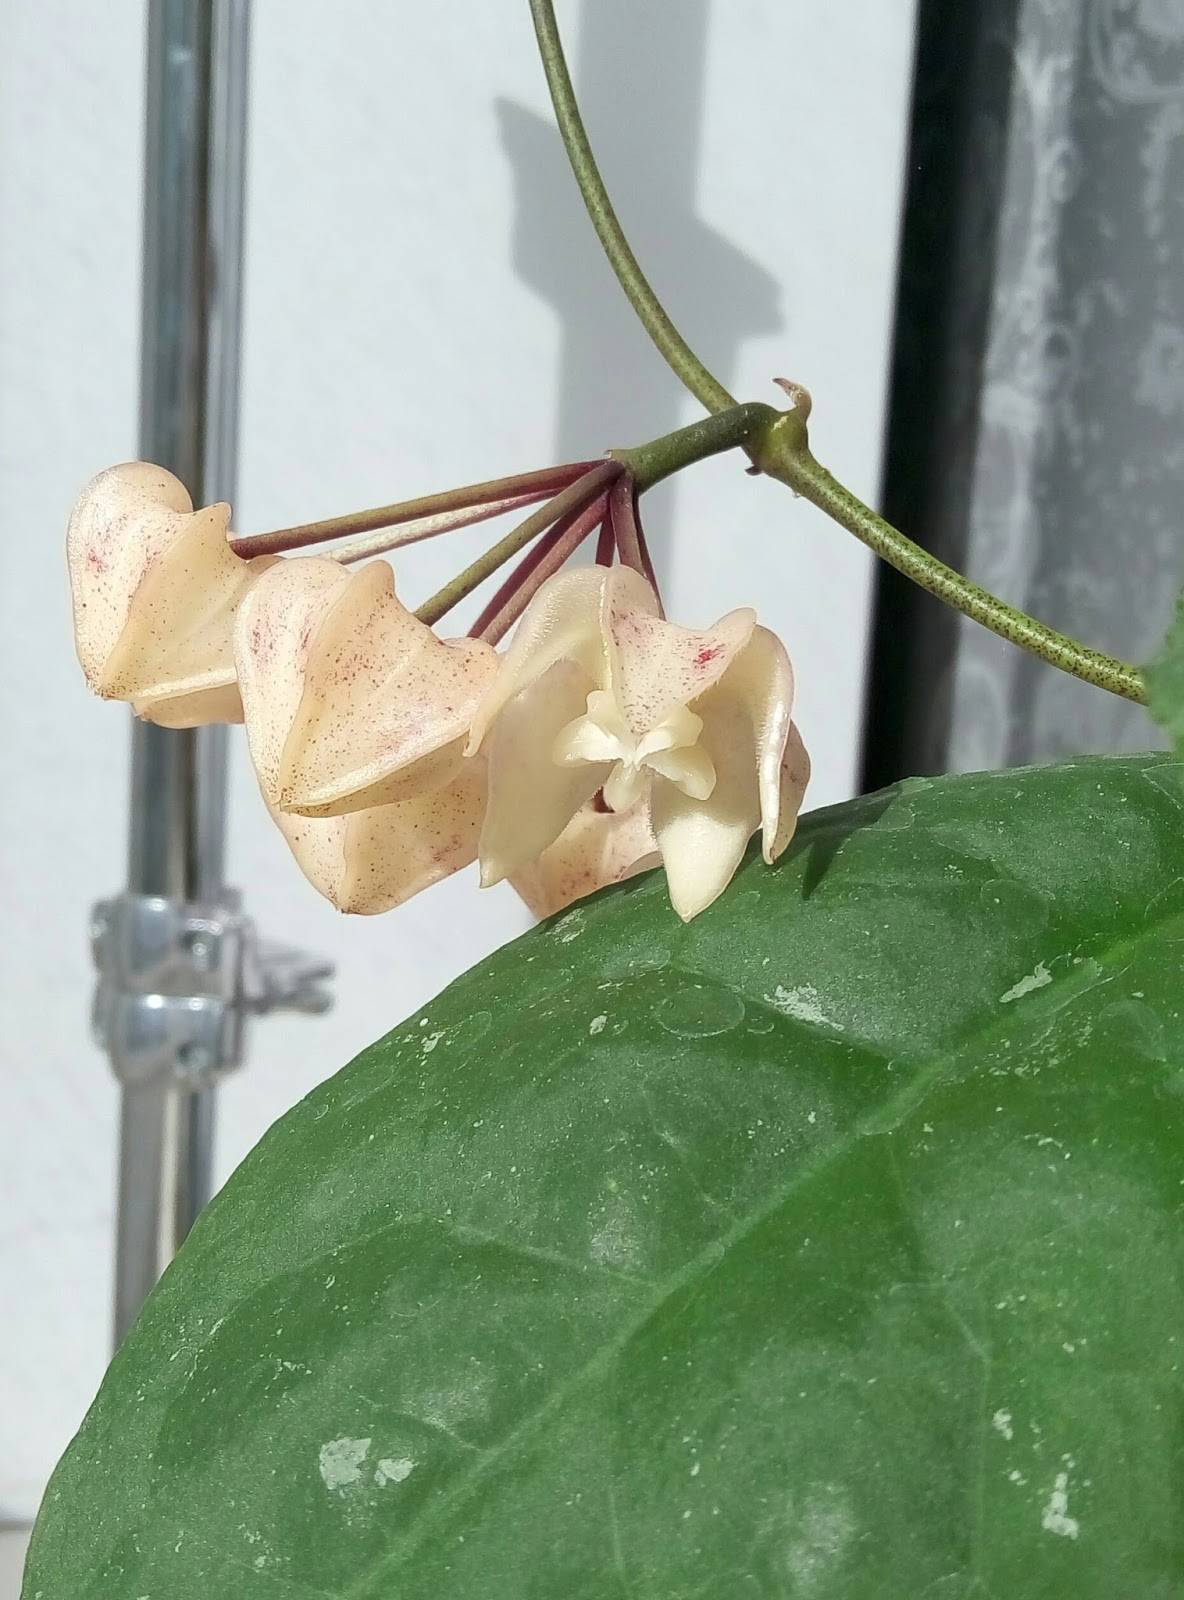 Цветок хойя в домашних условиях: уход, фото, пересадка, размножение, почему не цветет